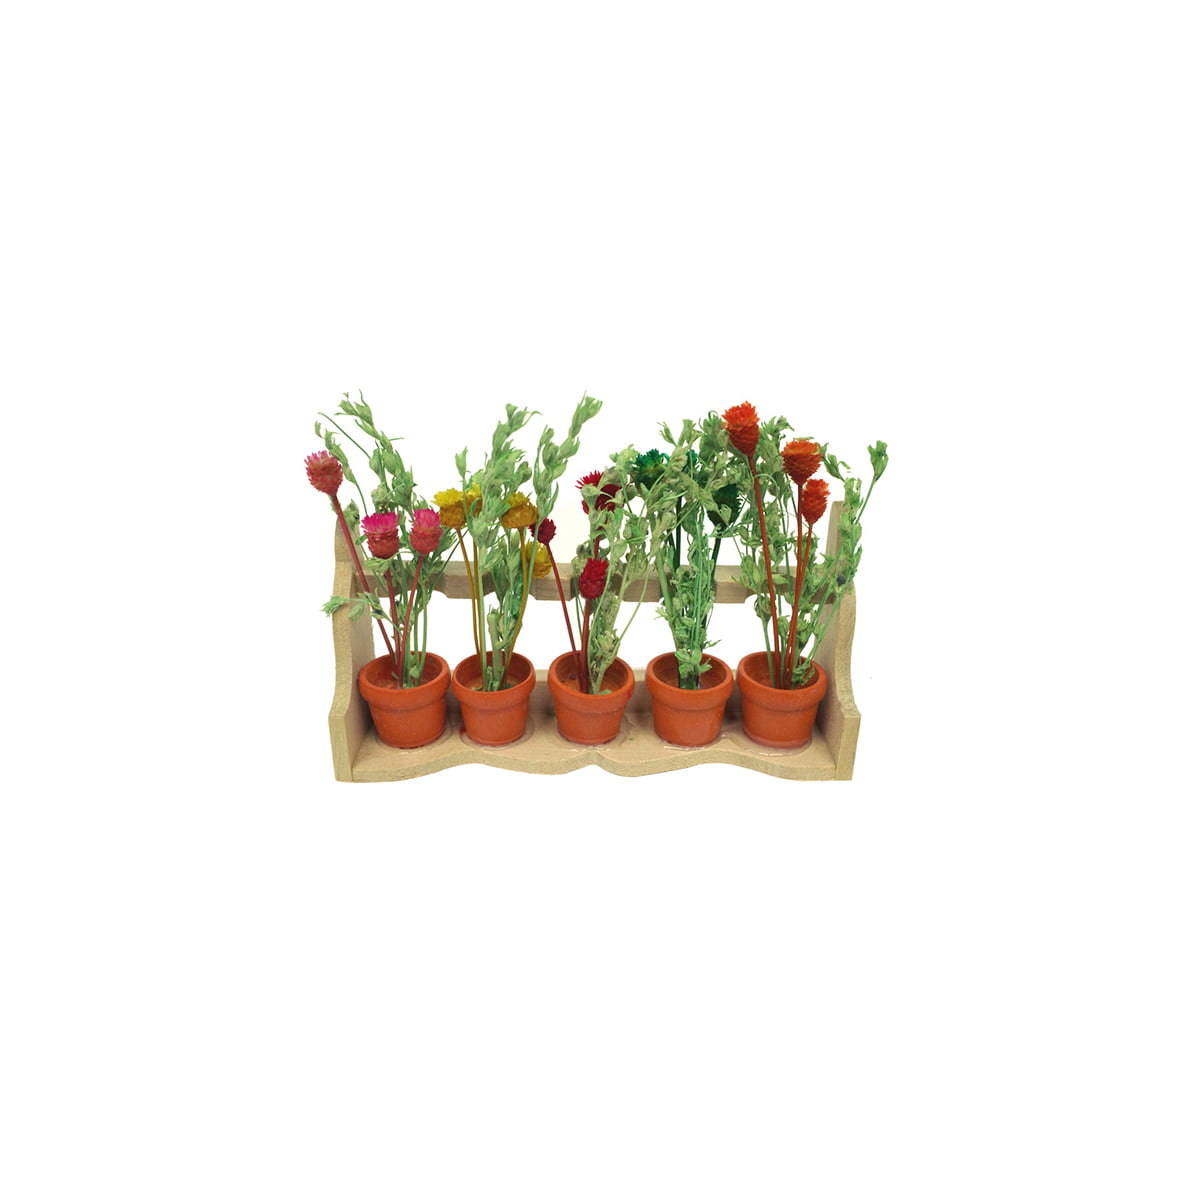 Miniature Dollhouse FAIRY GARDEN Accessories ~ Mixed Flowers in Window Box ~ NEW 